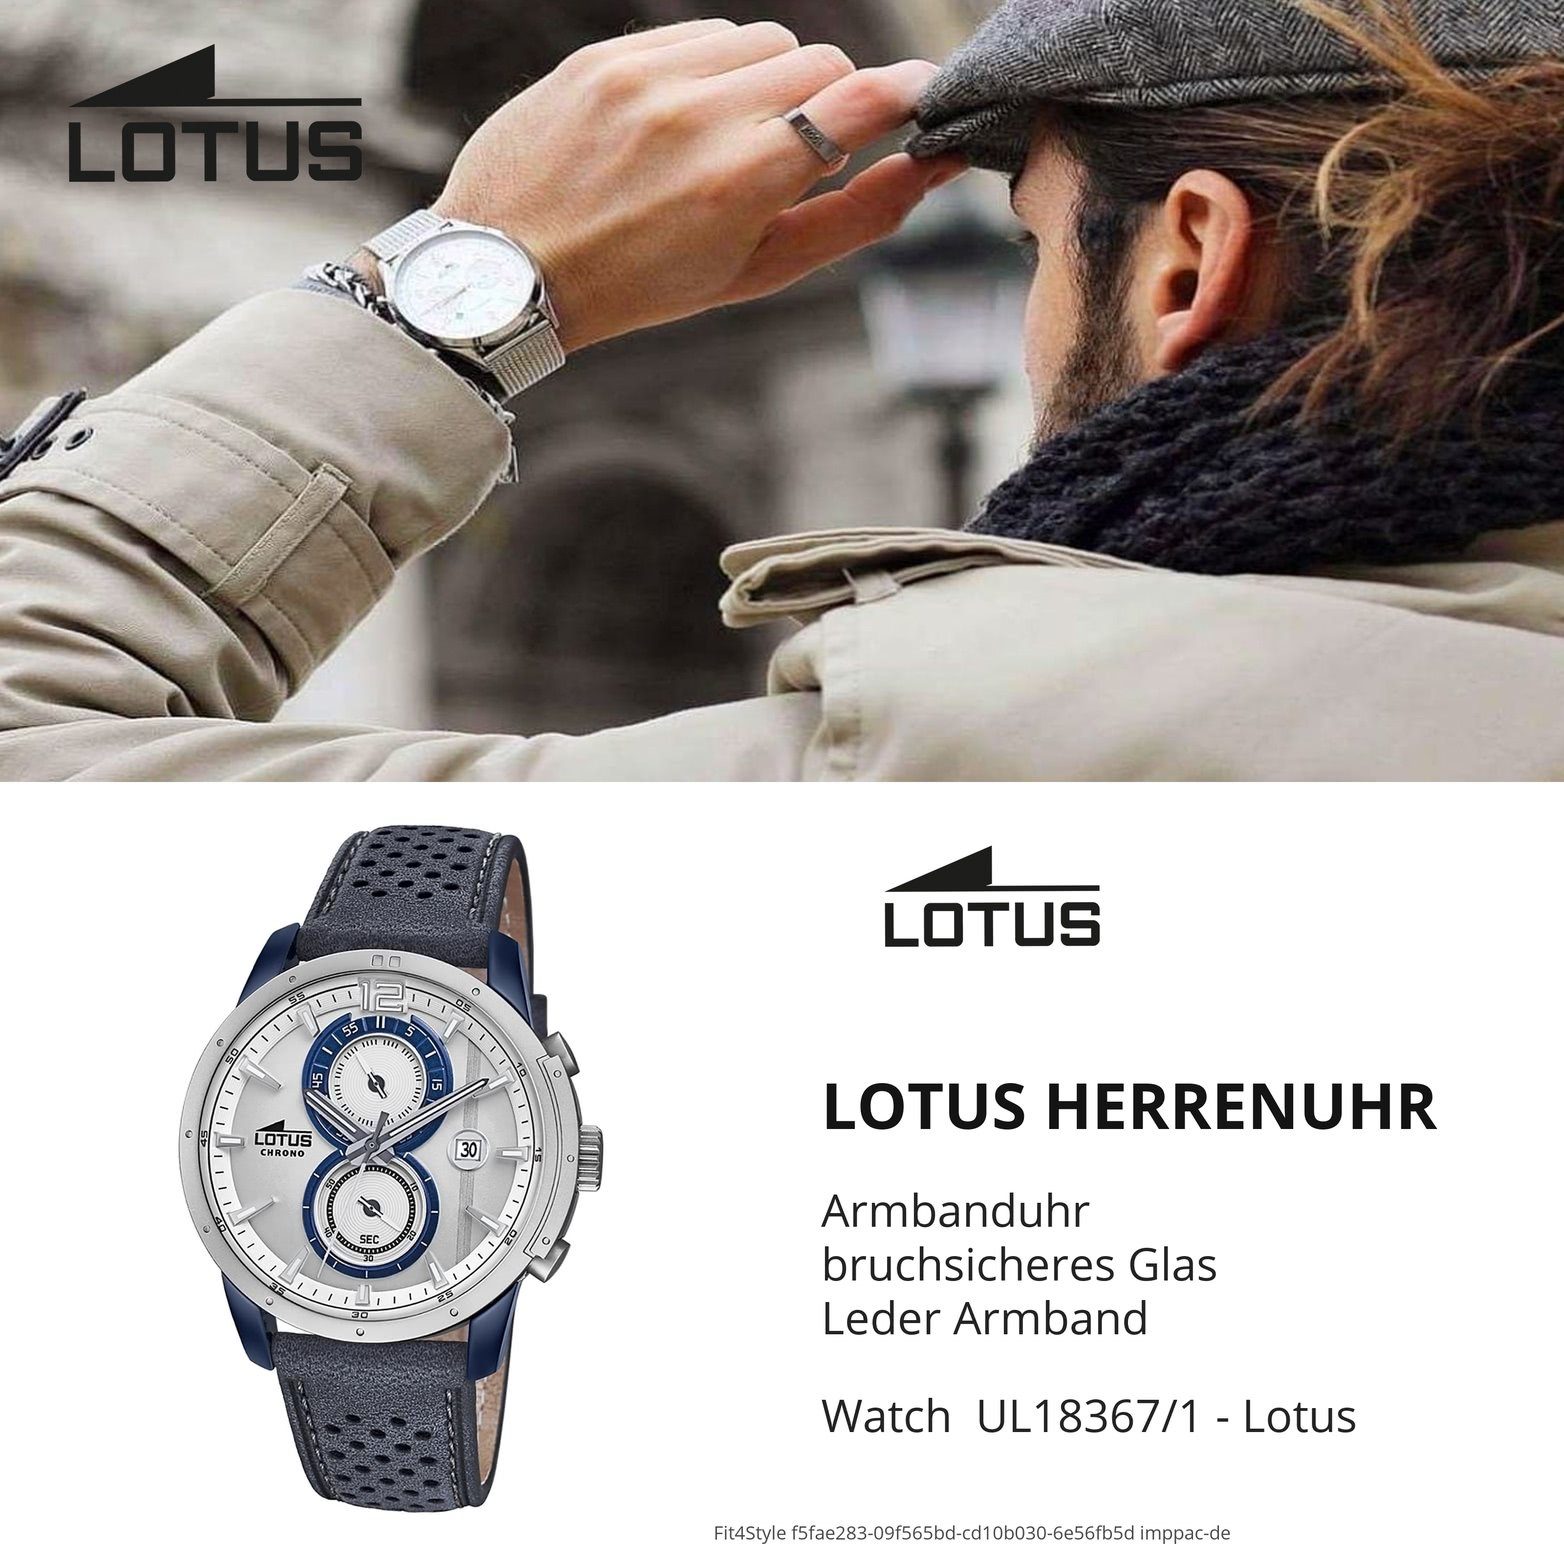 Lotus Herren Sport-Sty L18367/1, Uhr Chronograph Chrono (ca. Gehäuse, 44mm), rundes Lederarmband, mit Lotus Herrenuhr Leder groß